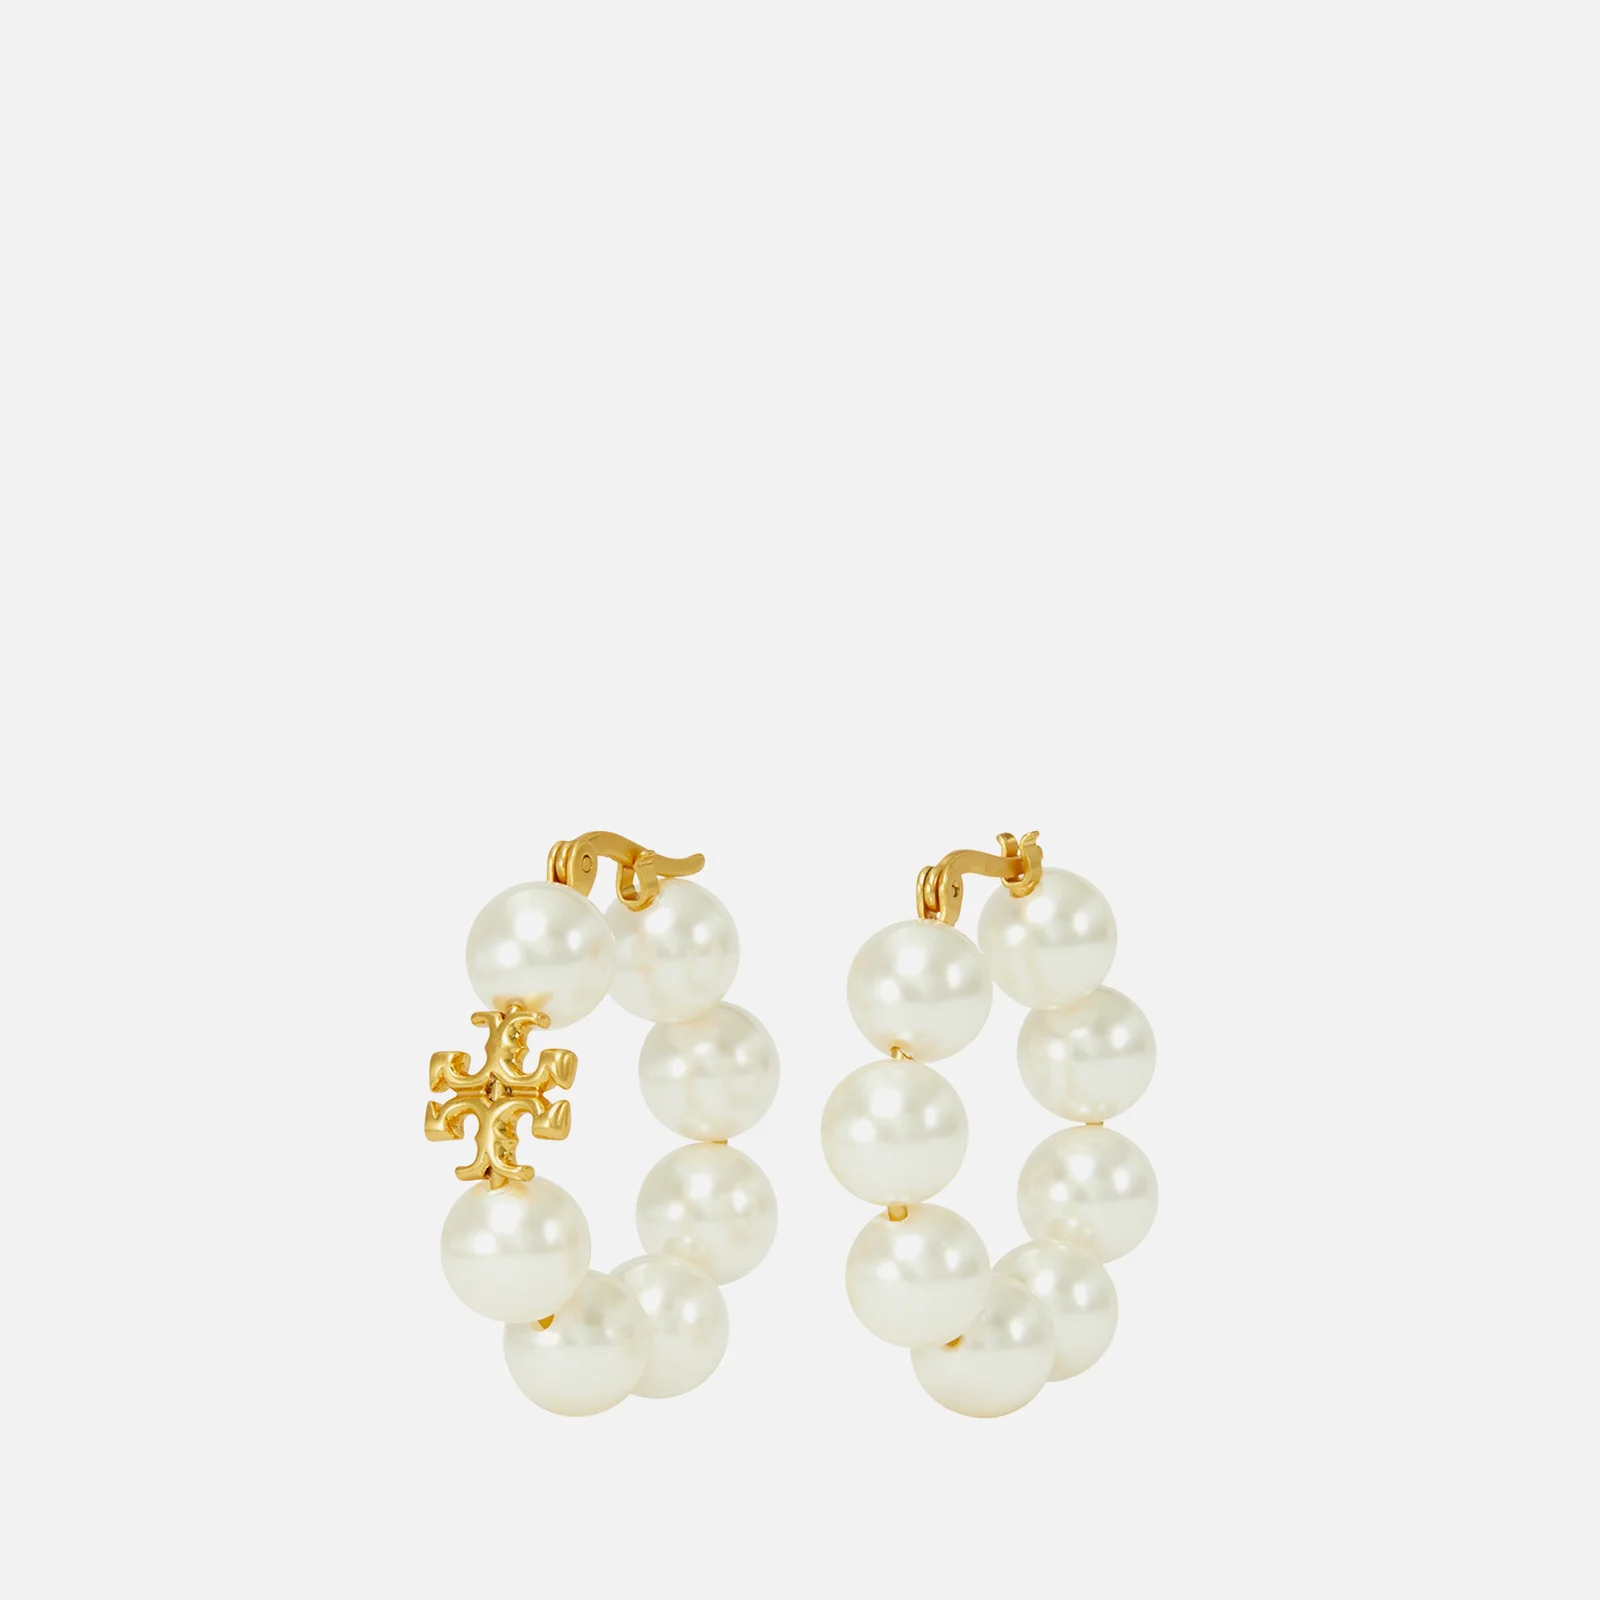 Tory Burch Kira Gold-Tone and Faux Pearl Hoop Earrings Image 1